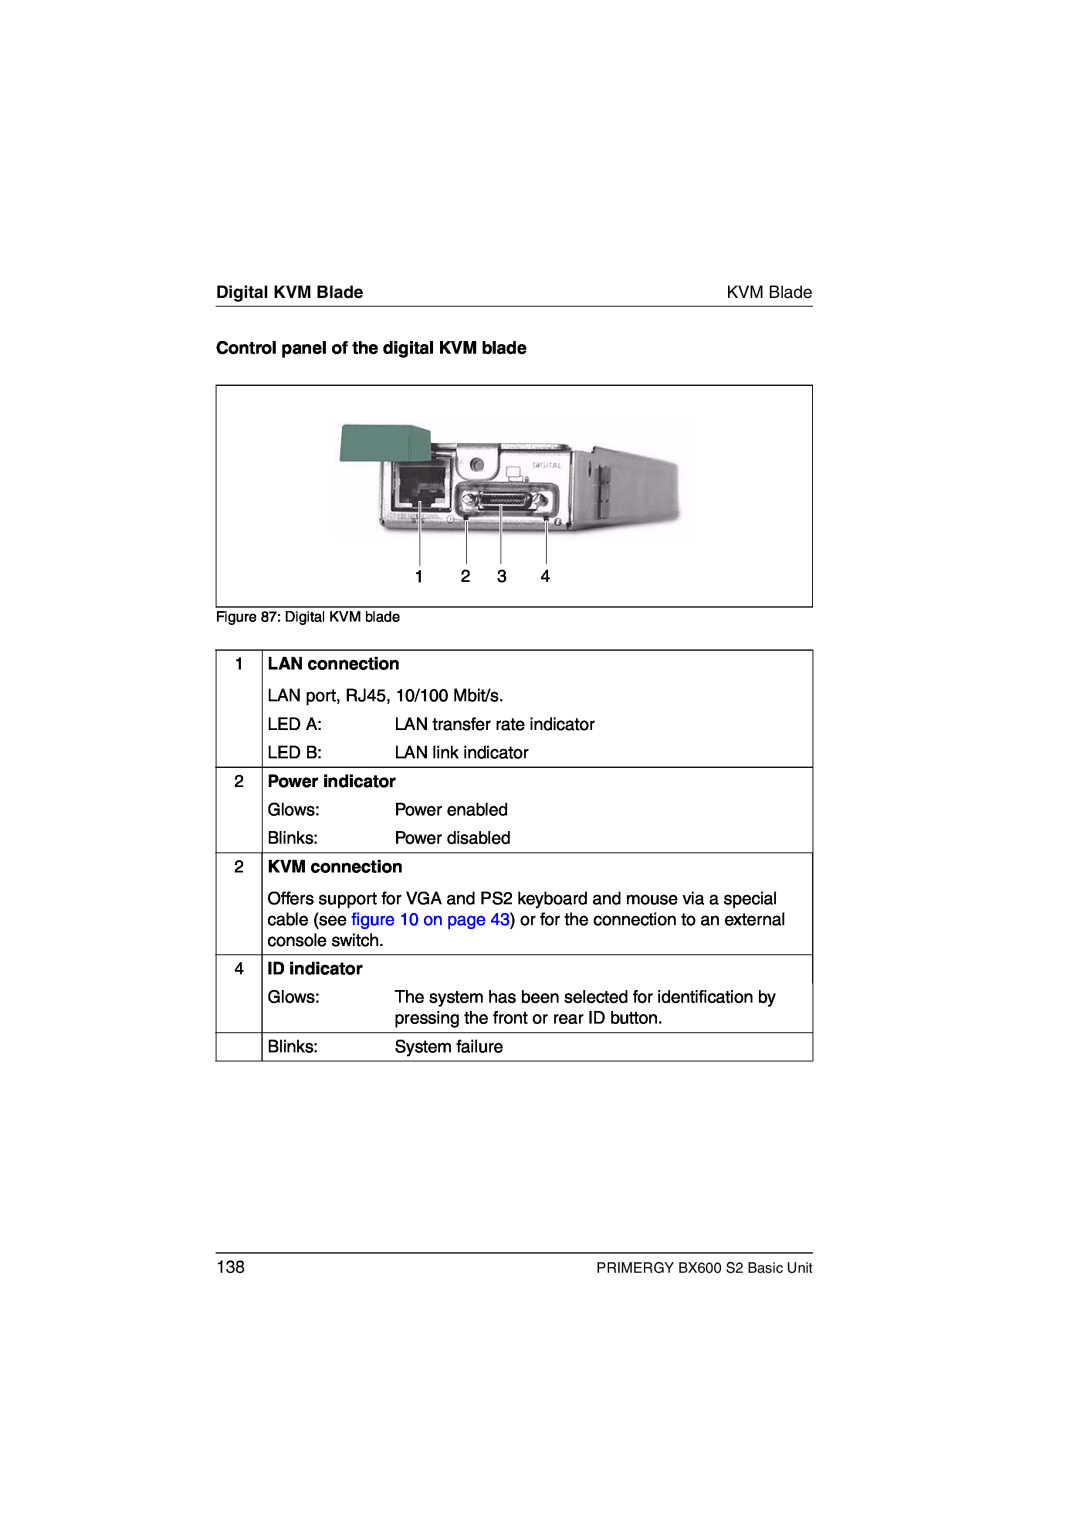 Fujitsu BX600 S2 Digital KVM Blade, Control panel of the digital KVM blade, LAN connection, Power indicator, ID indicator 